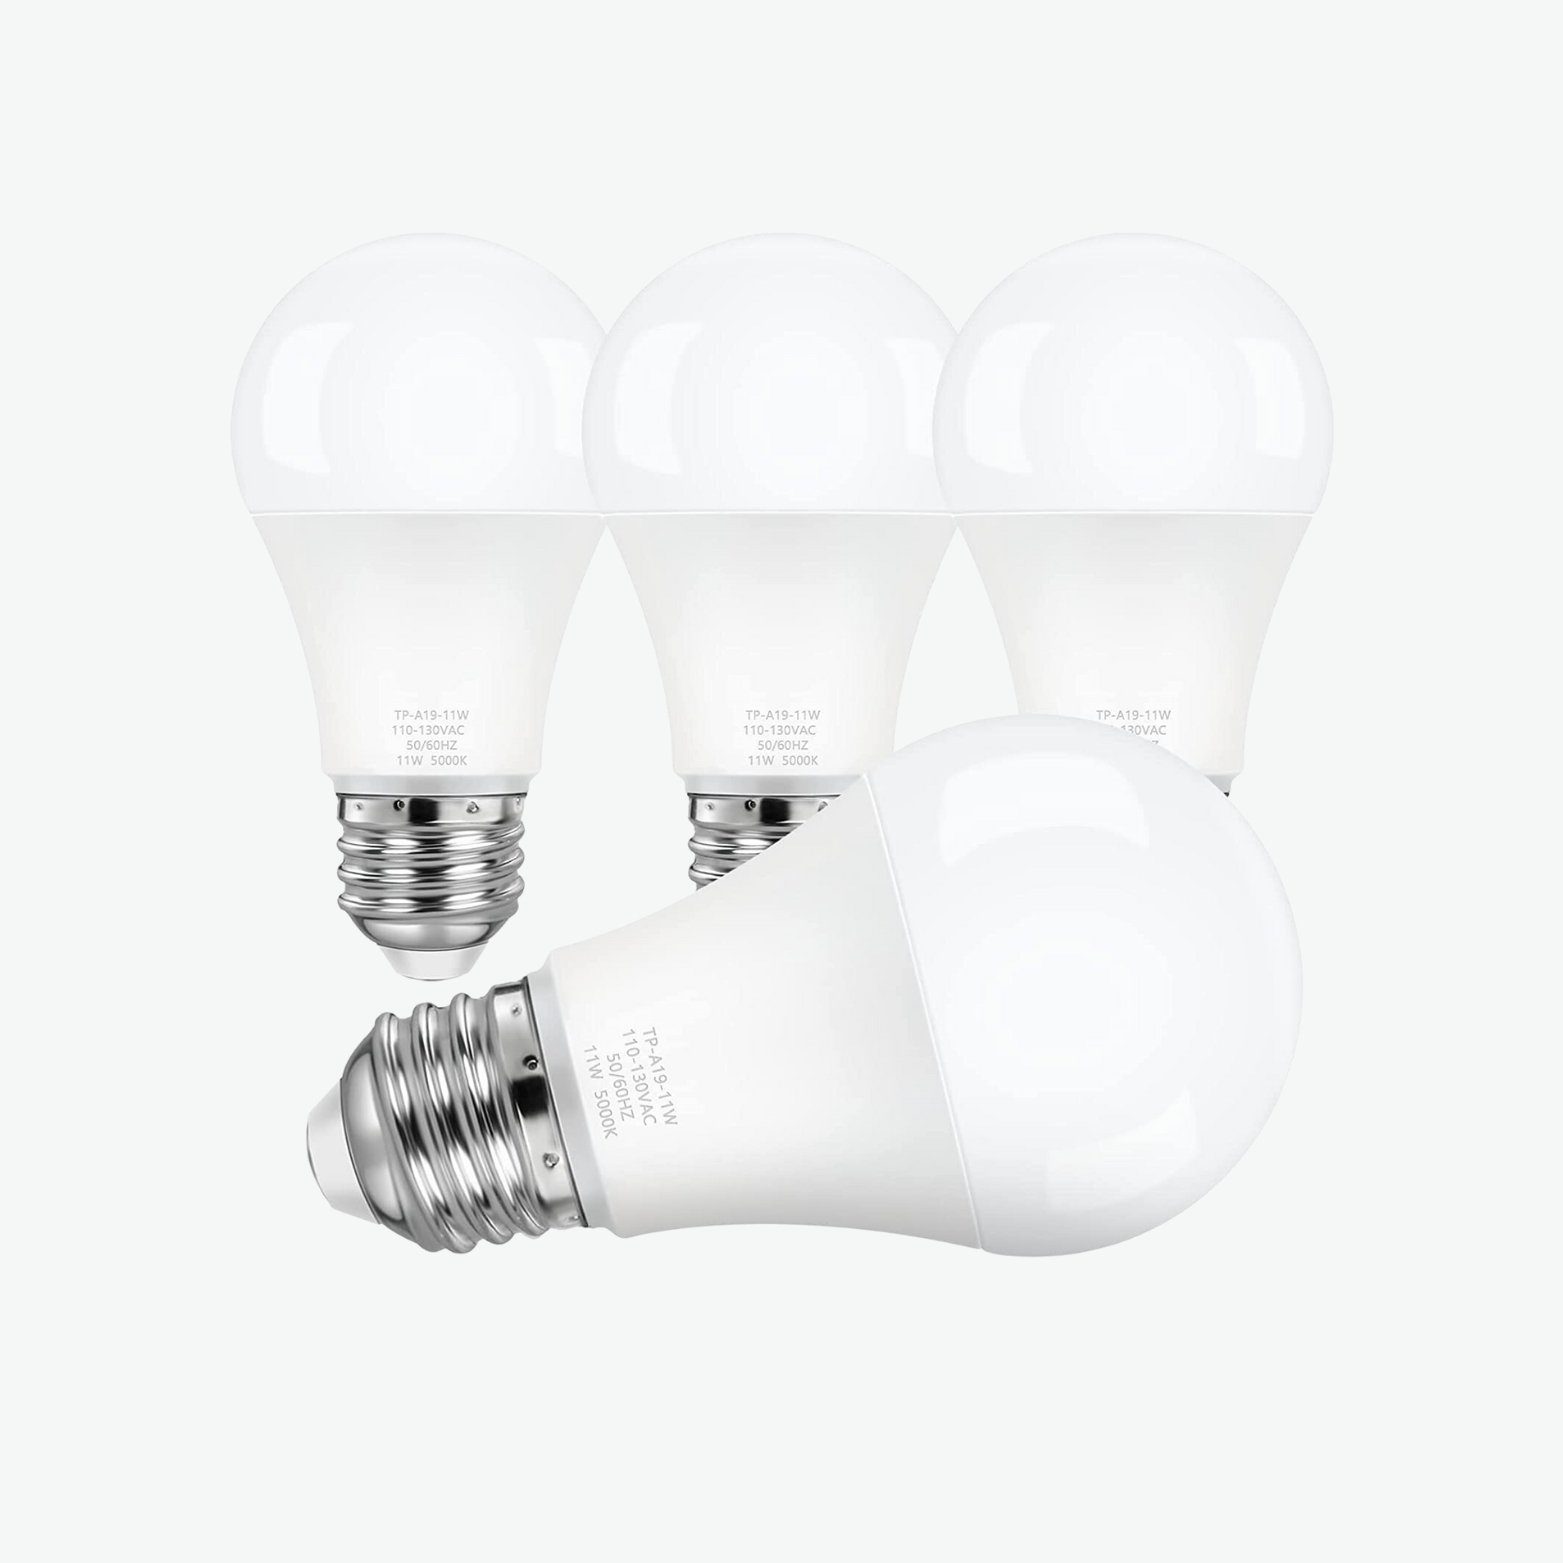 LED Light Bulbs.jpg